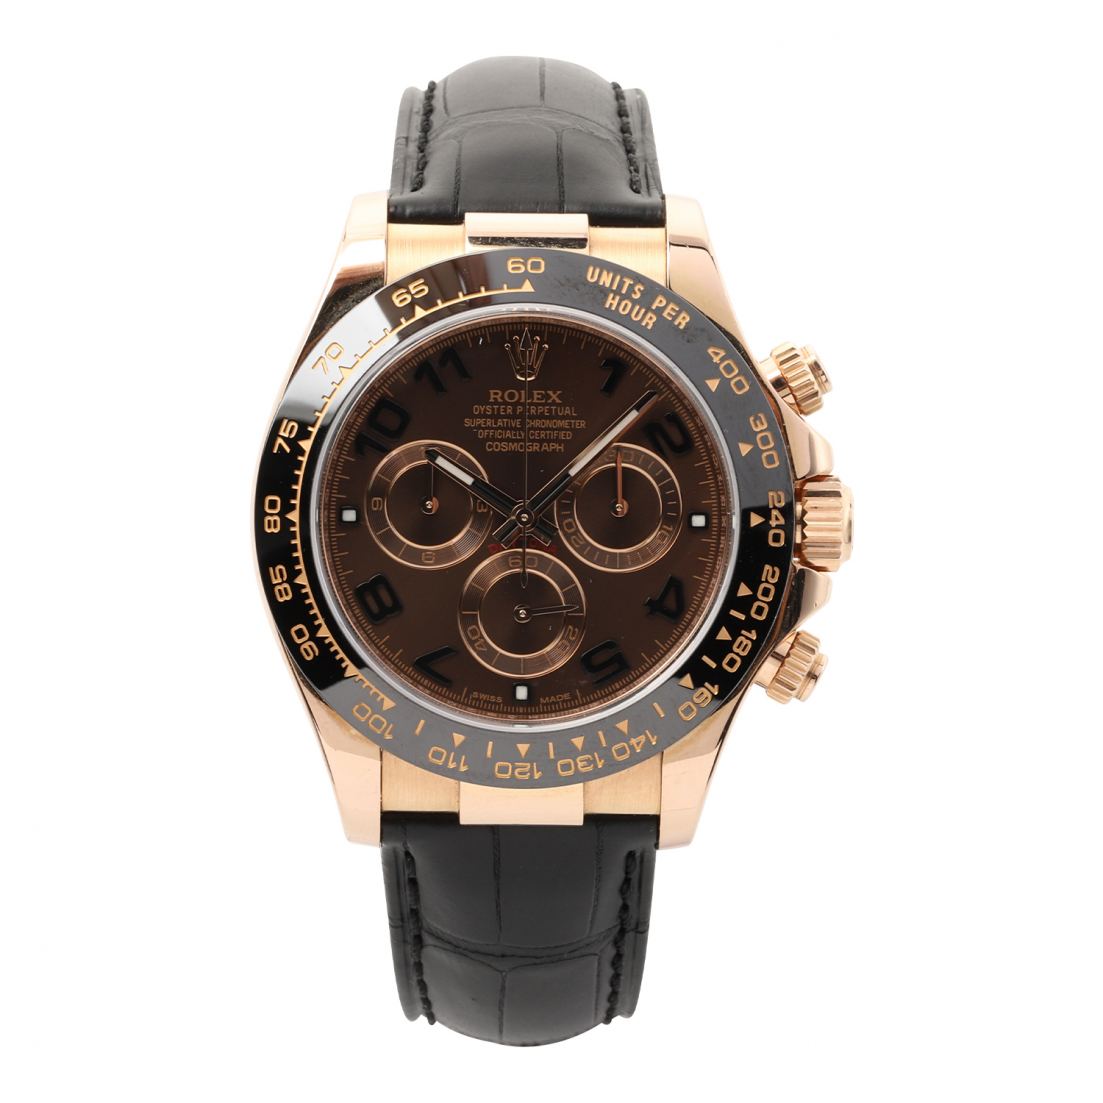 Rolex Cosmograph Daytona wristwatch, Ref. 116515.